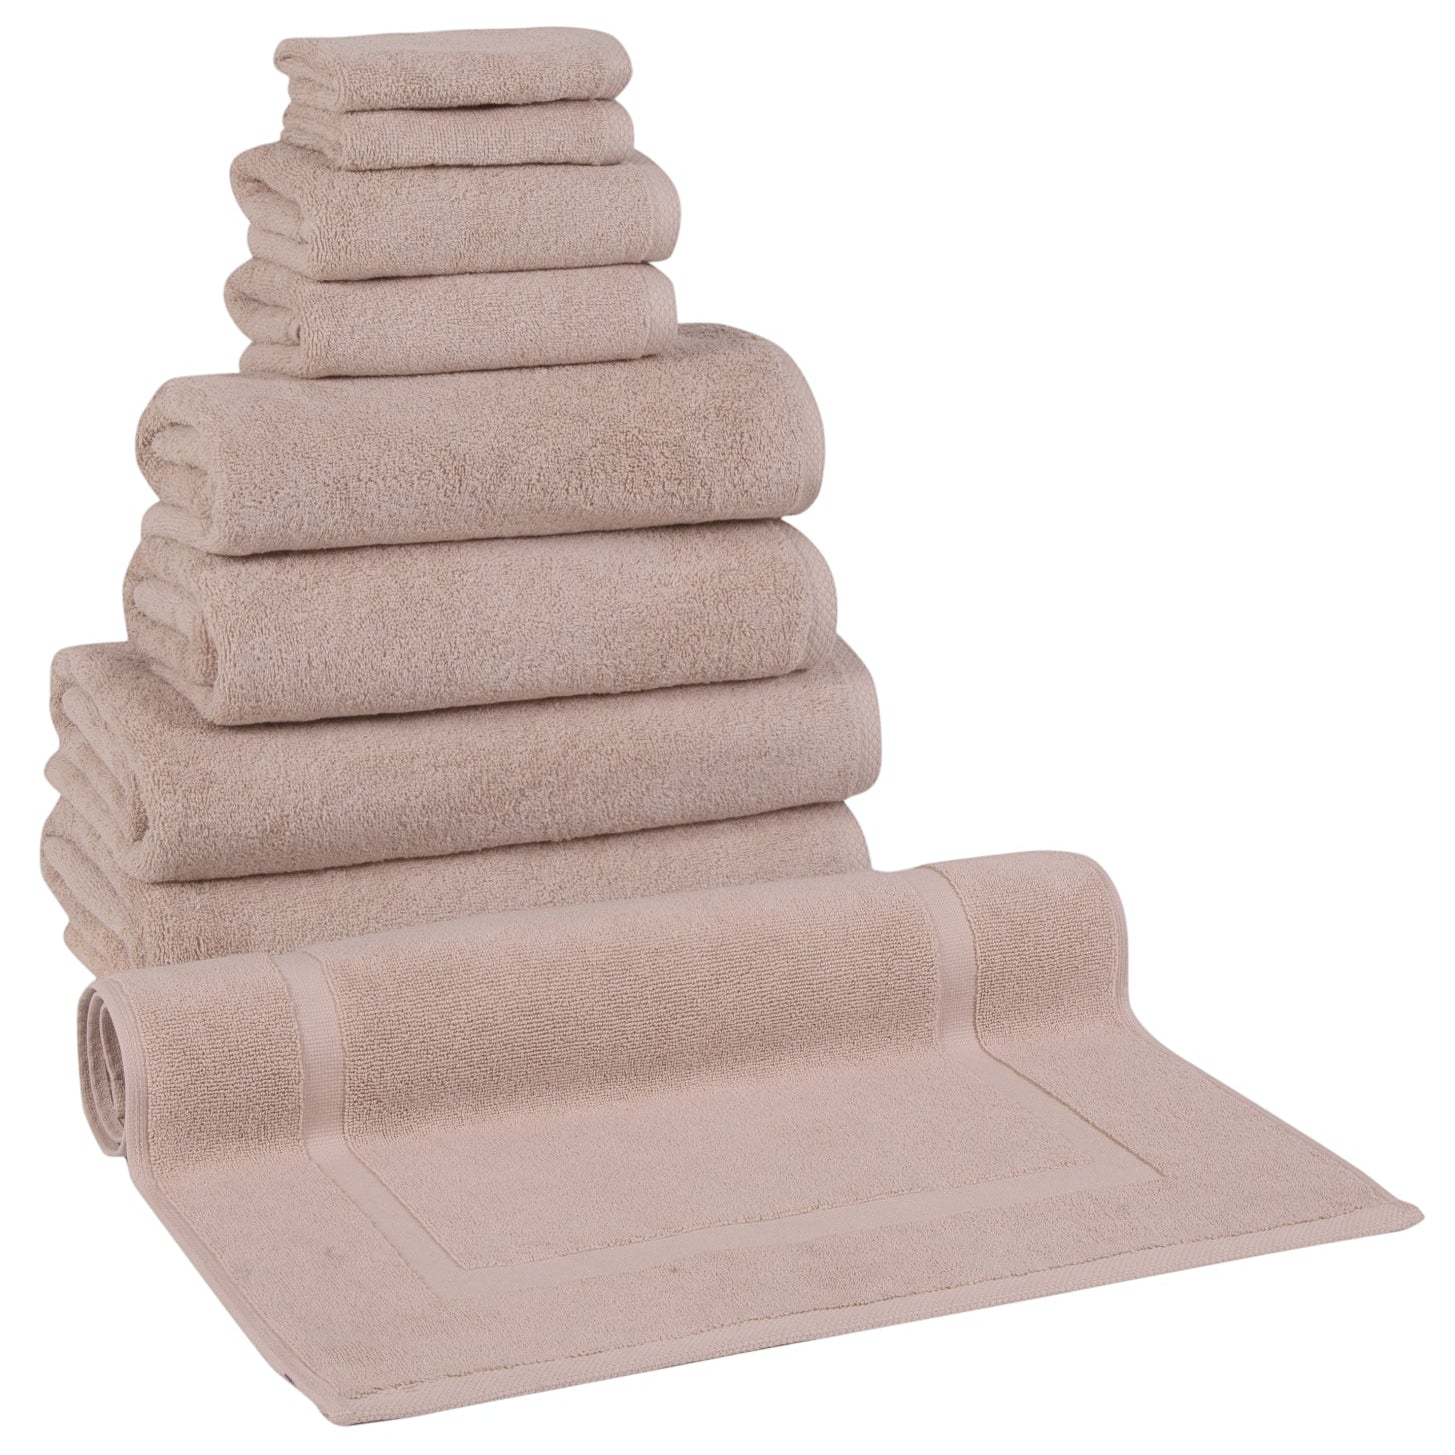 Classic-Turkish-Towels-Genuine-Cotton-Soft-Absorbent-Arsenal-9-Piece-Set-With-2-Bath-Towel-2-Bath-Sheet-2-Hand-Towel-2-Washcloth-And-A-Bathmat-Home-Goods